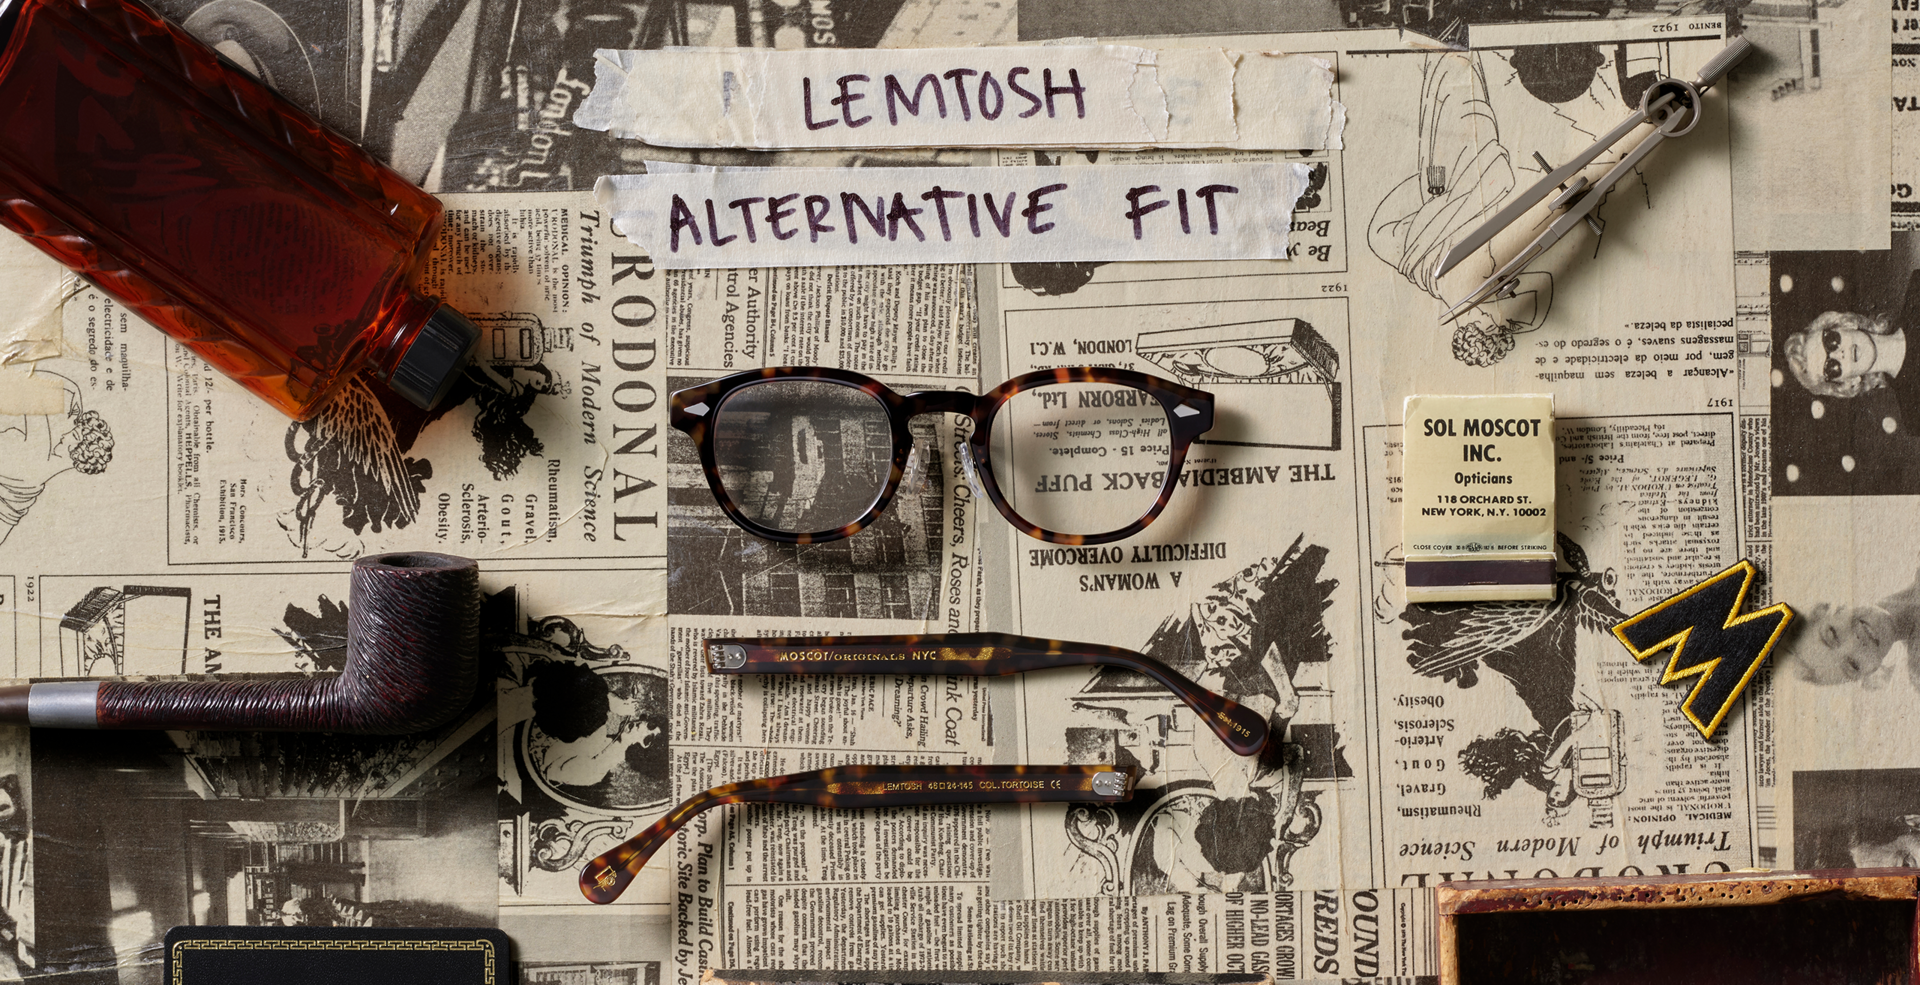 The LEMTOSH Alternative Fit